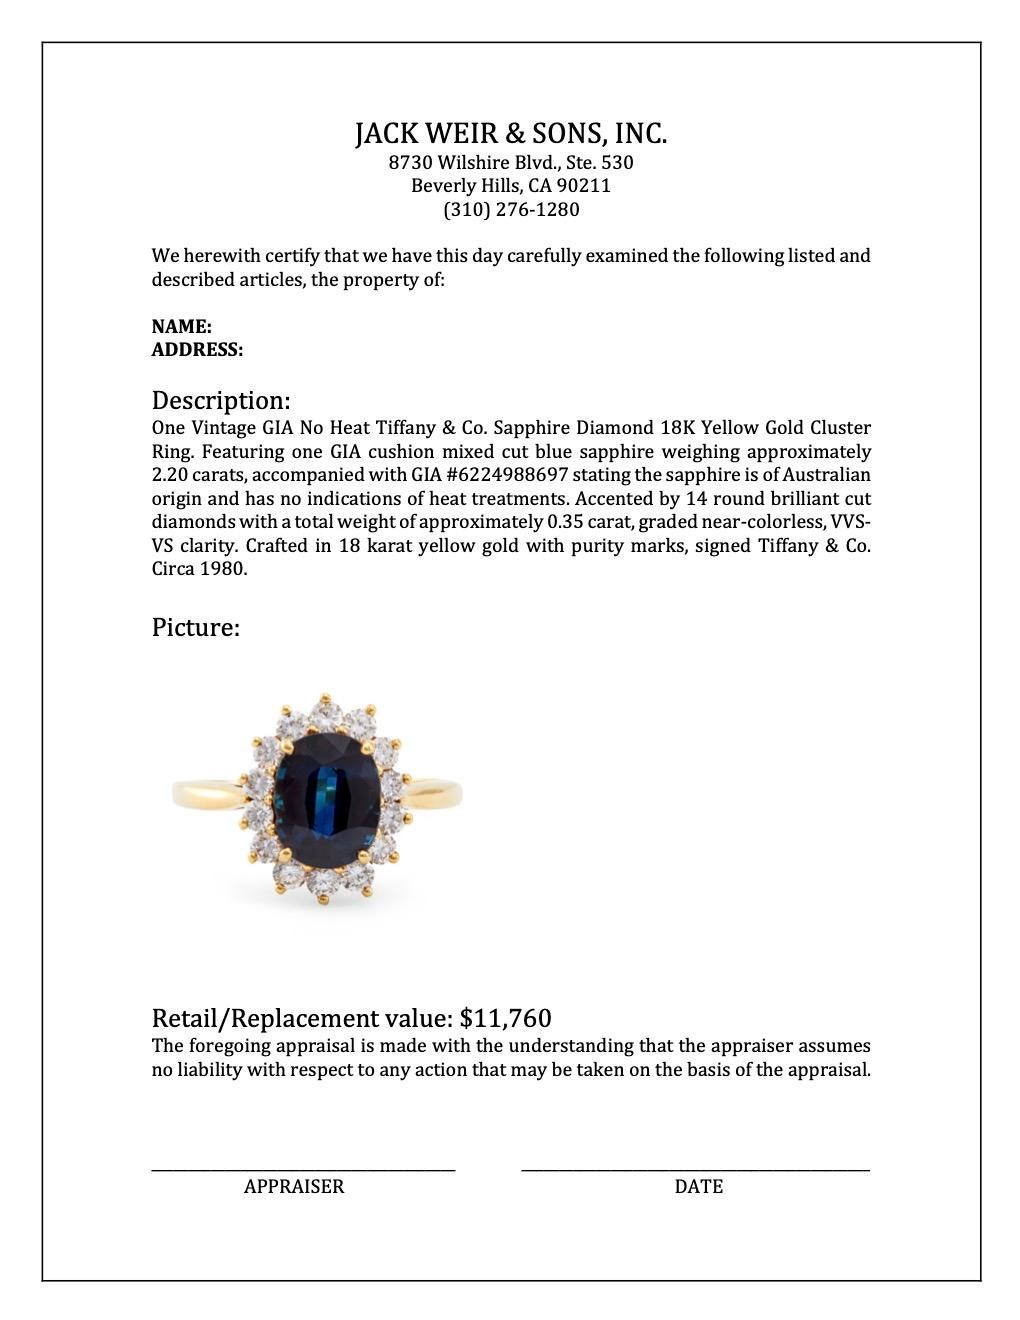 Vintage GIA No Heat Tiffany & Co. Sapphire Diamond 18K Yellow Gold Cluster Ring 2